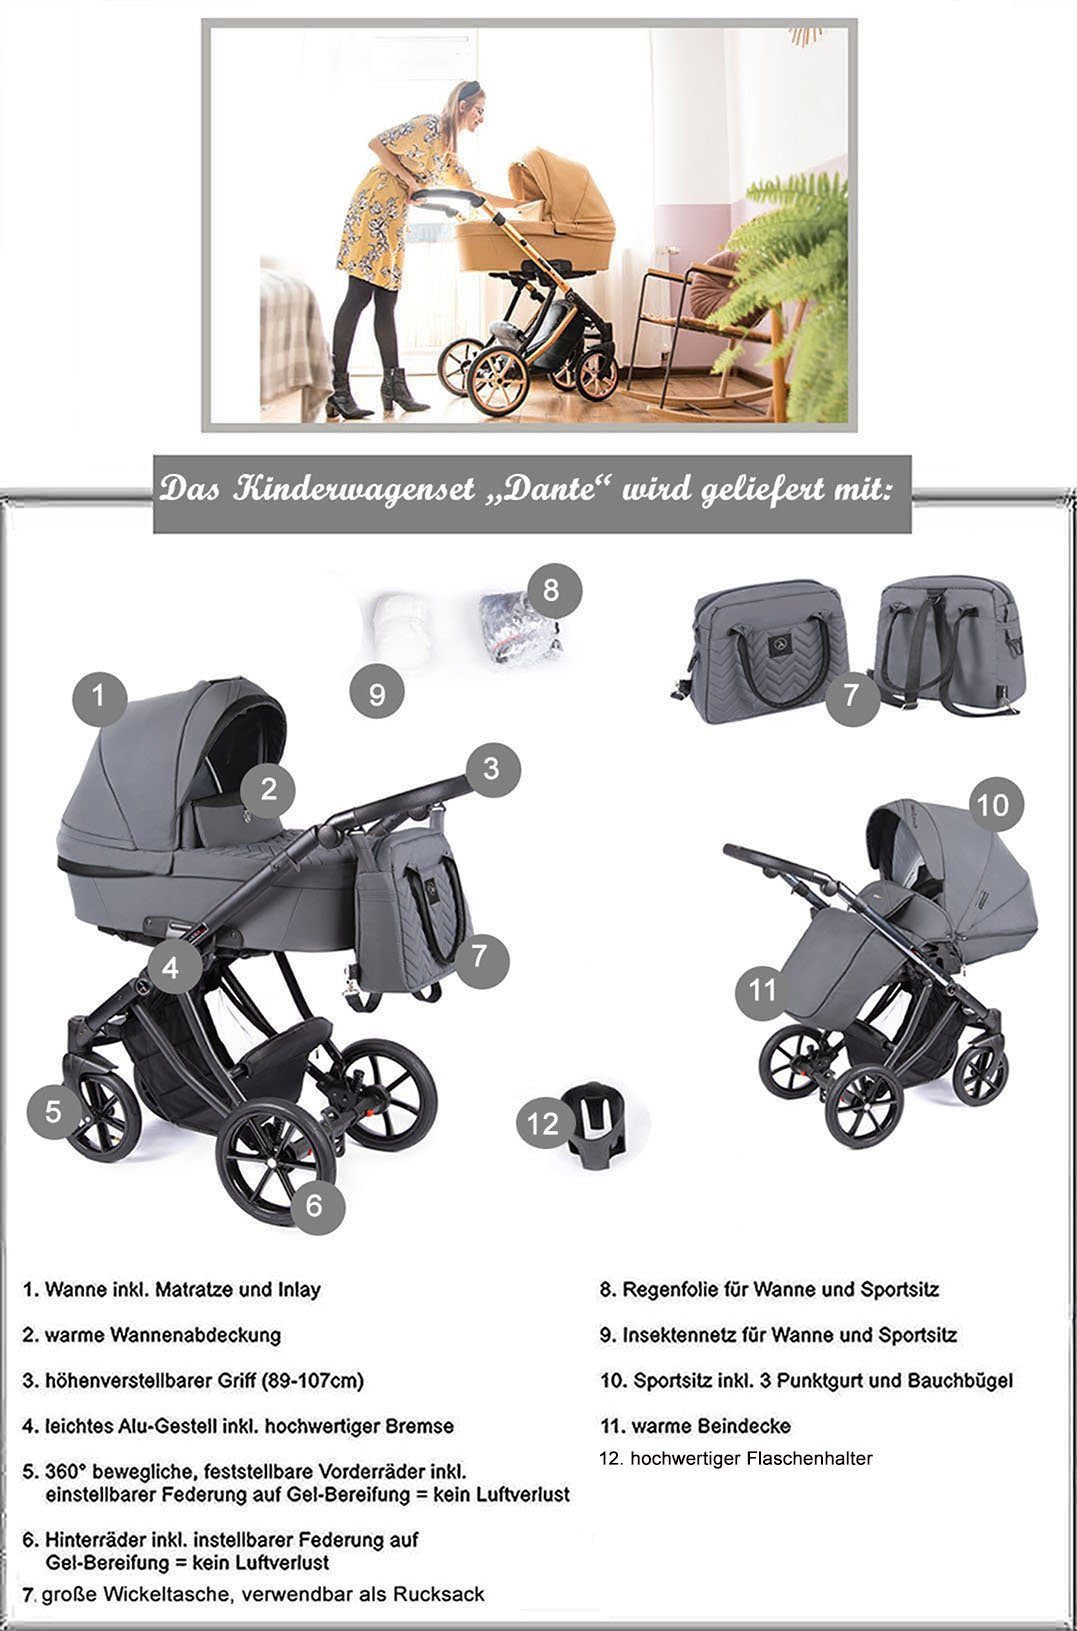 babies-on-wheels Dante in 2 - Teile 1 Kombi-Kinderwagen 11 = Farben Kinderwagen-Set kupfer Schwarz - 16 Gestell in